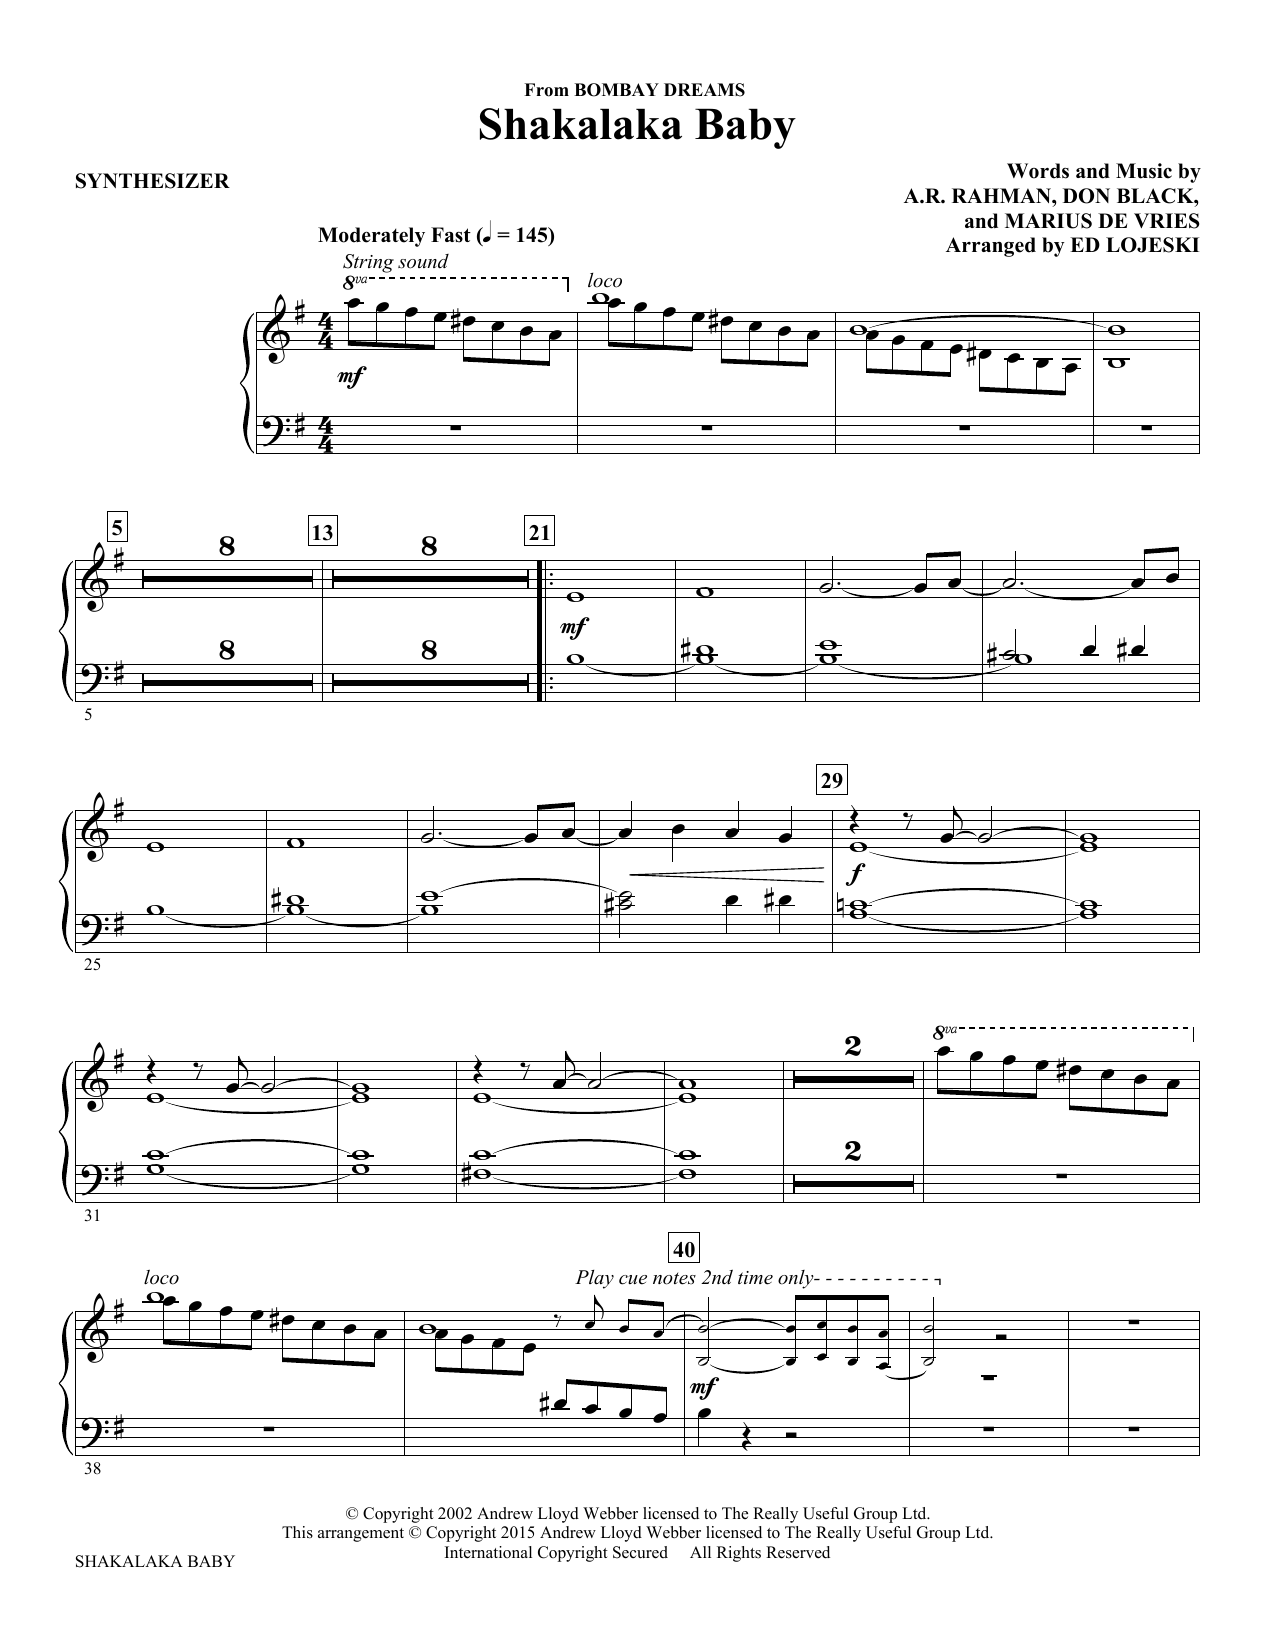 Ed Lojeski Shakalaka Baby (from Bombay Dreams) - Synthesizer sheet music notes and chords. Download Printable PDF.